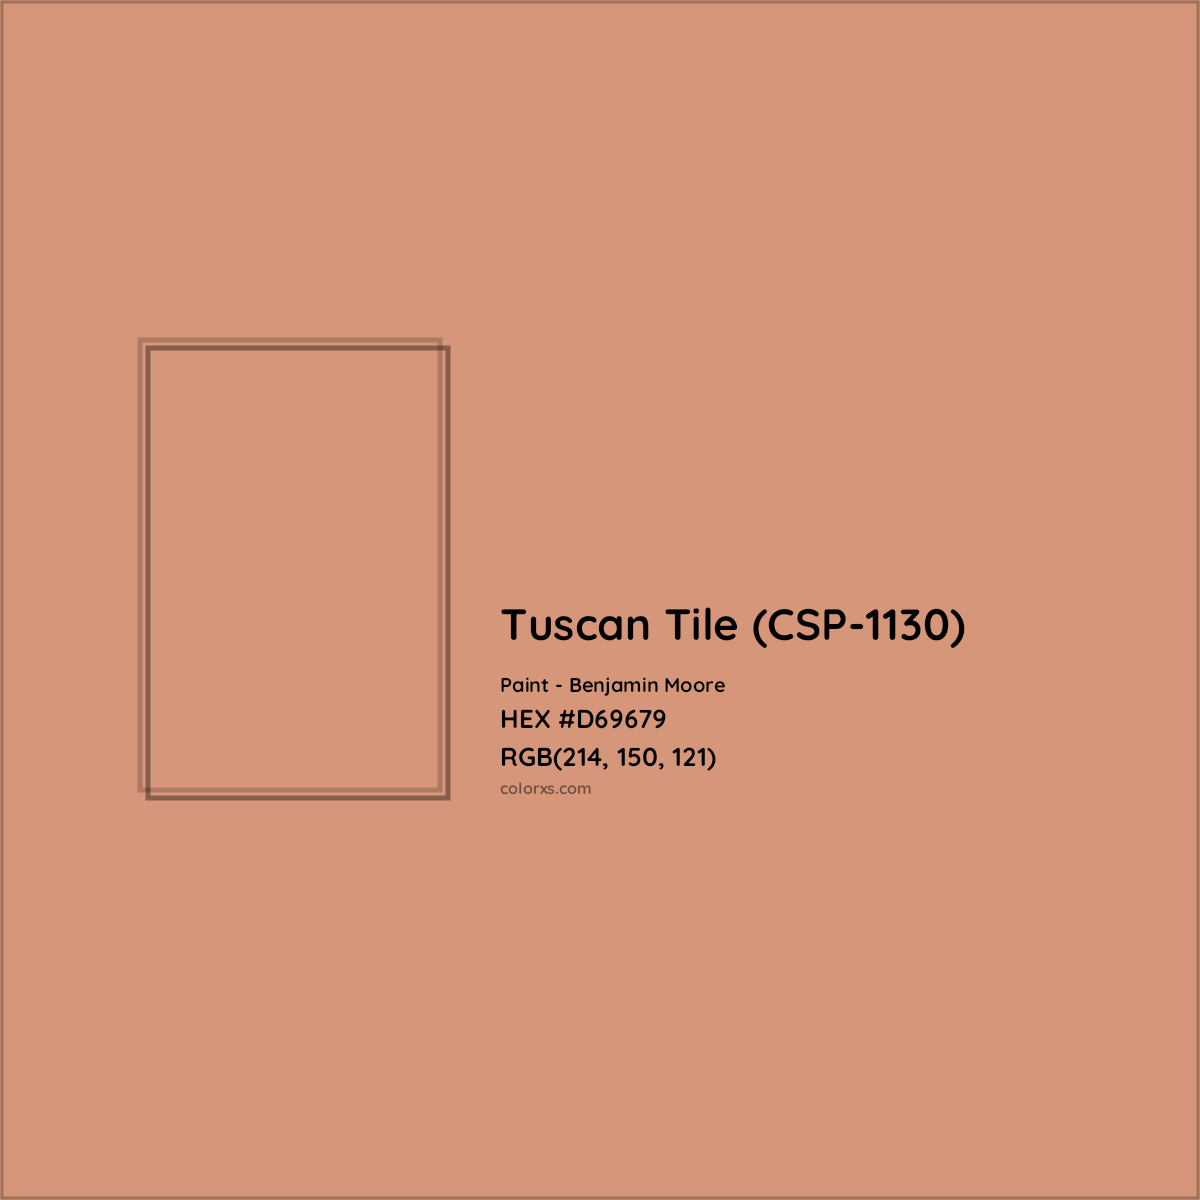 HEX #D69679 Tuscan Tile (CSP-1130) Paint Benjamin Moore - Color Code